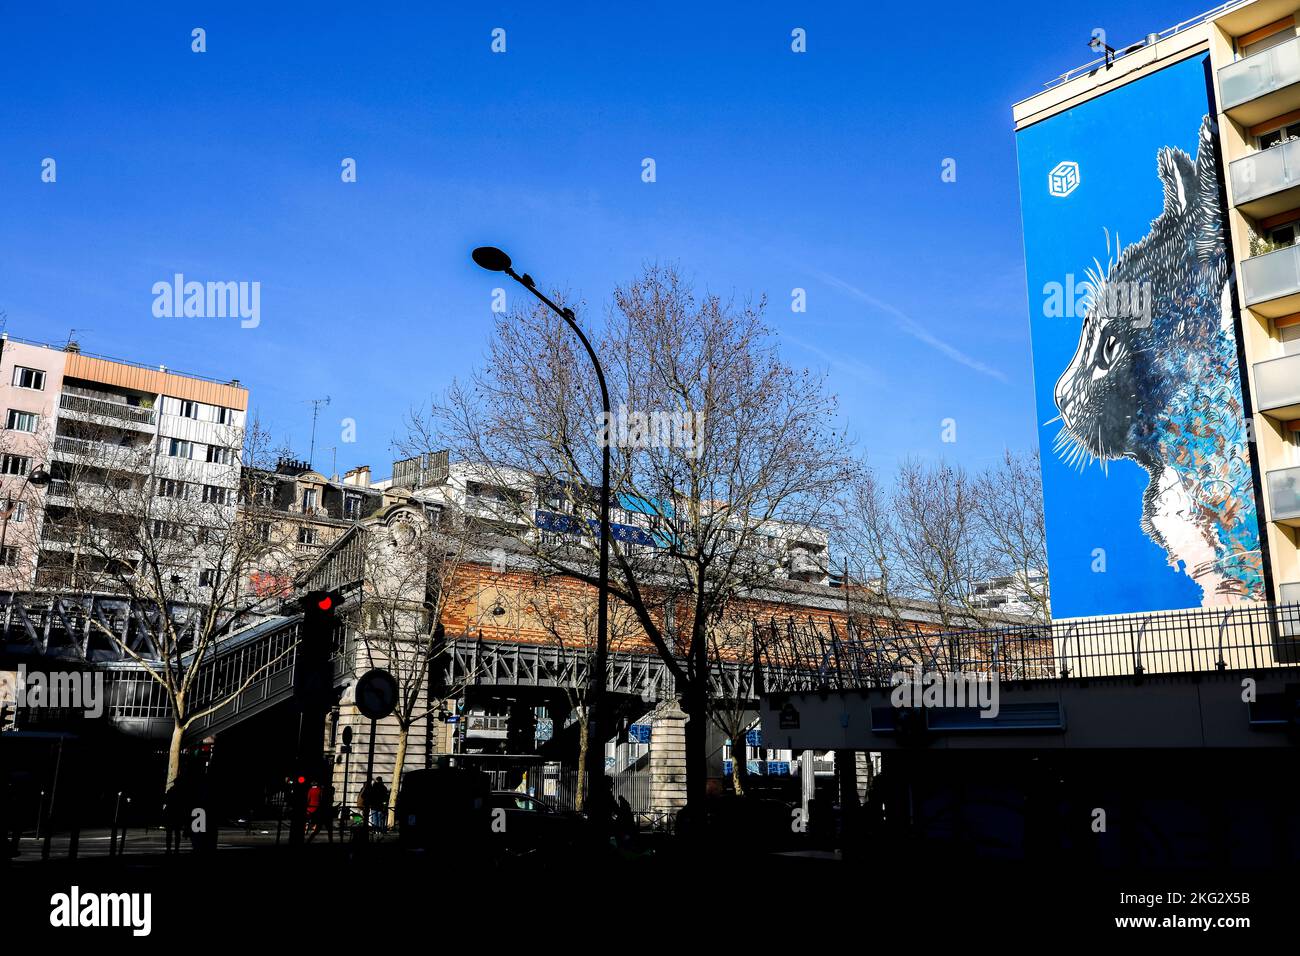 Edifici, arte di strada e metropolitana sopraelevata a Parigi 13, Francia. Il gatto blu, di C215, Christian GuemyCette immagine n'est pas tombée dans le domaine publ Foto Stock